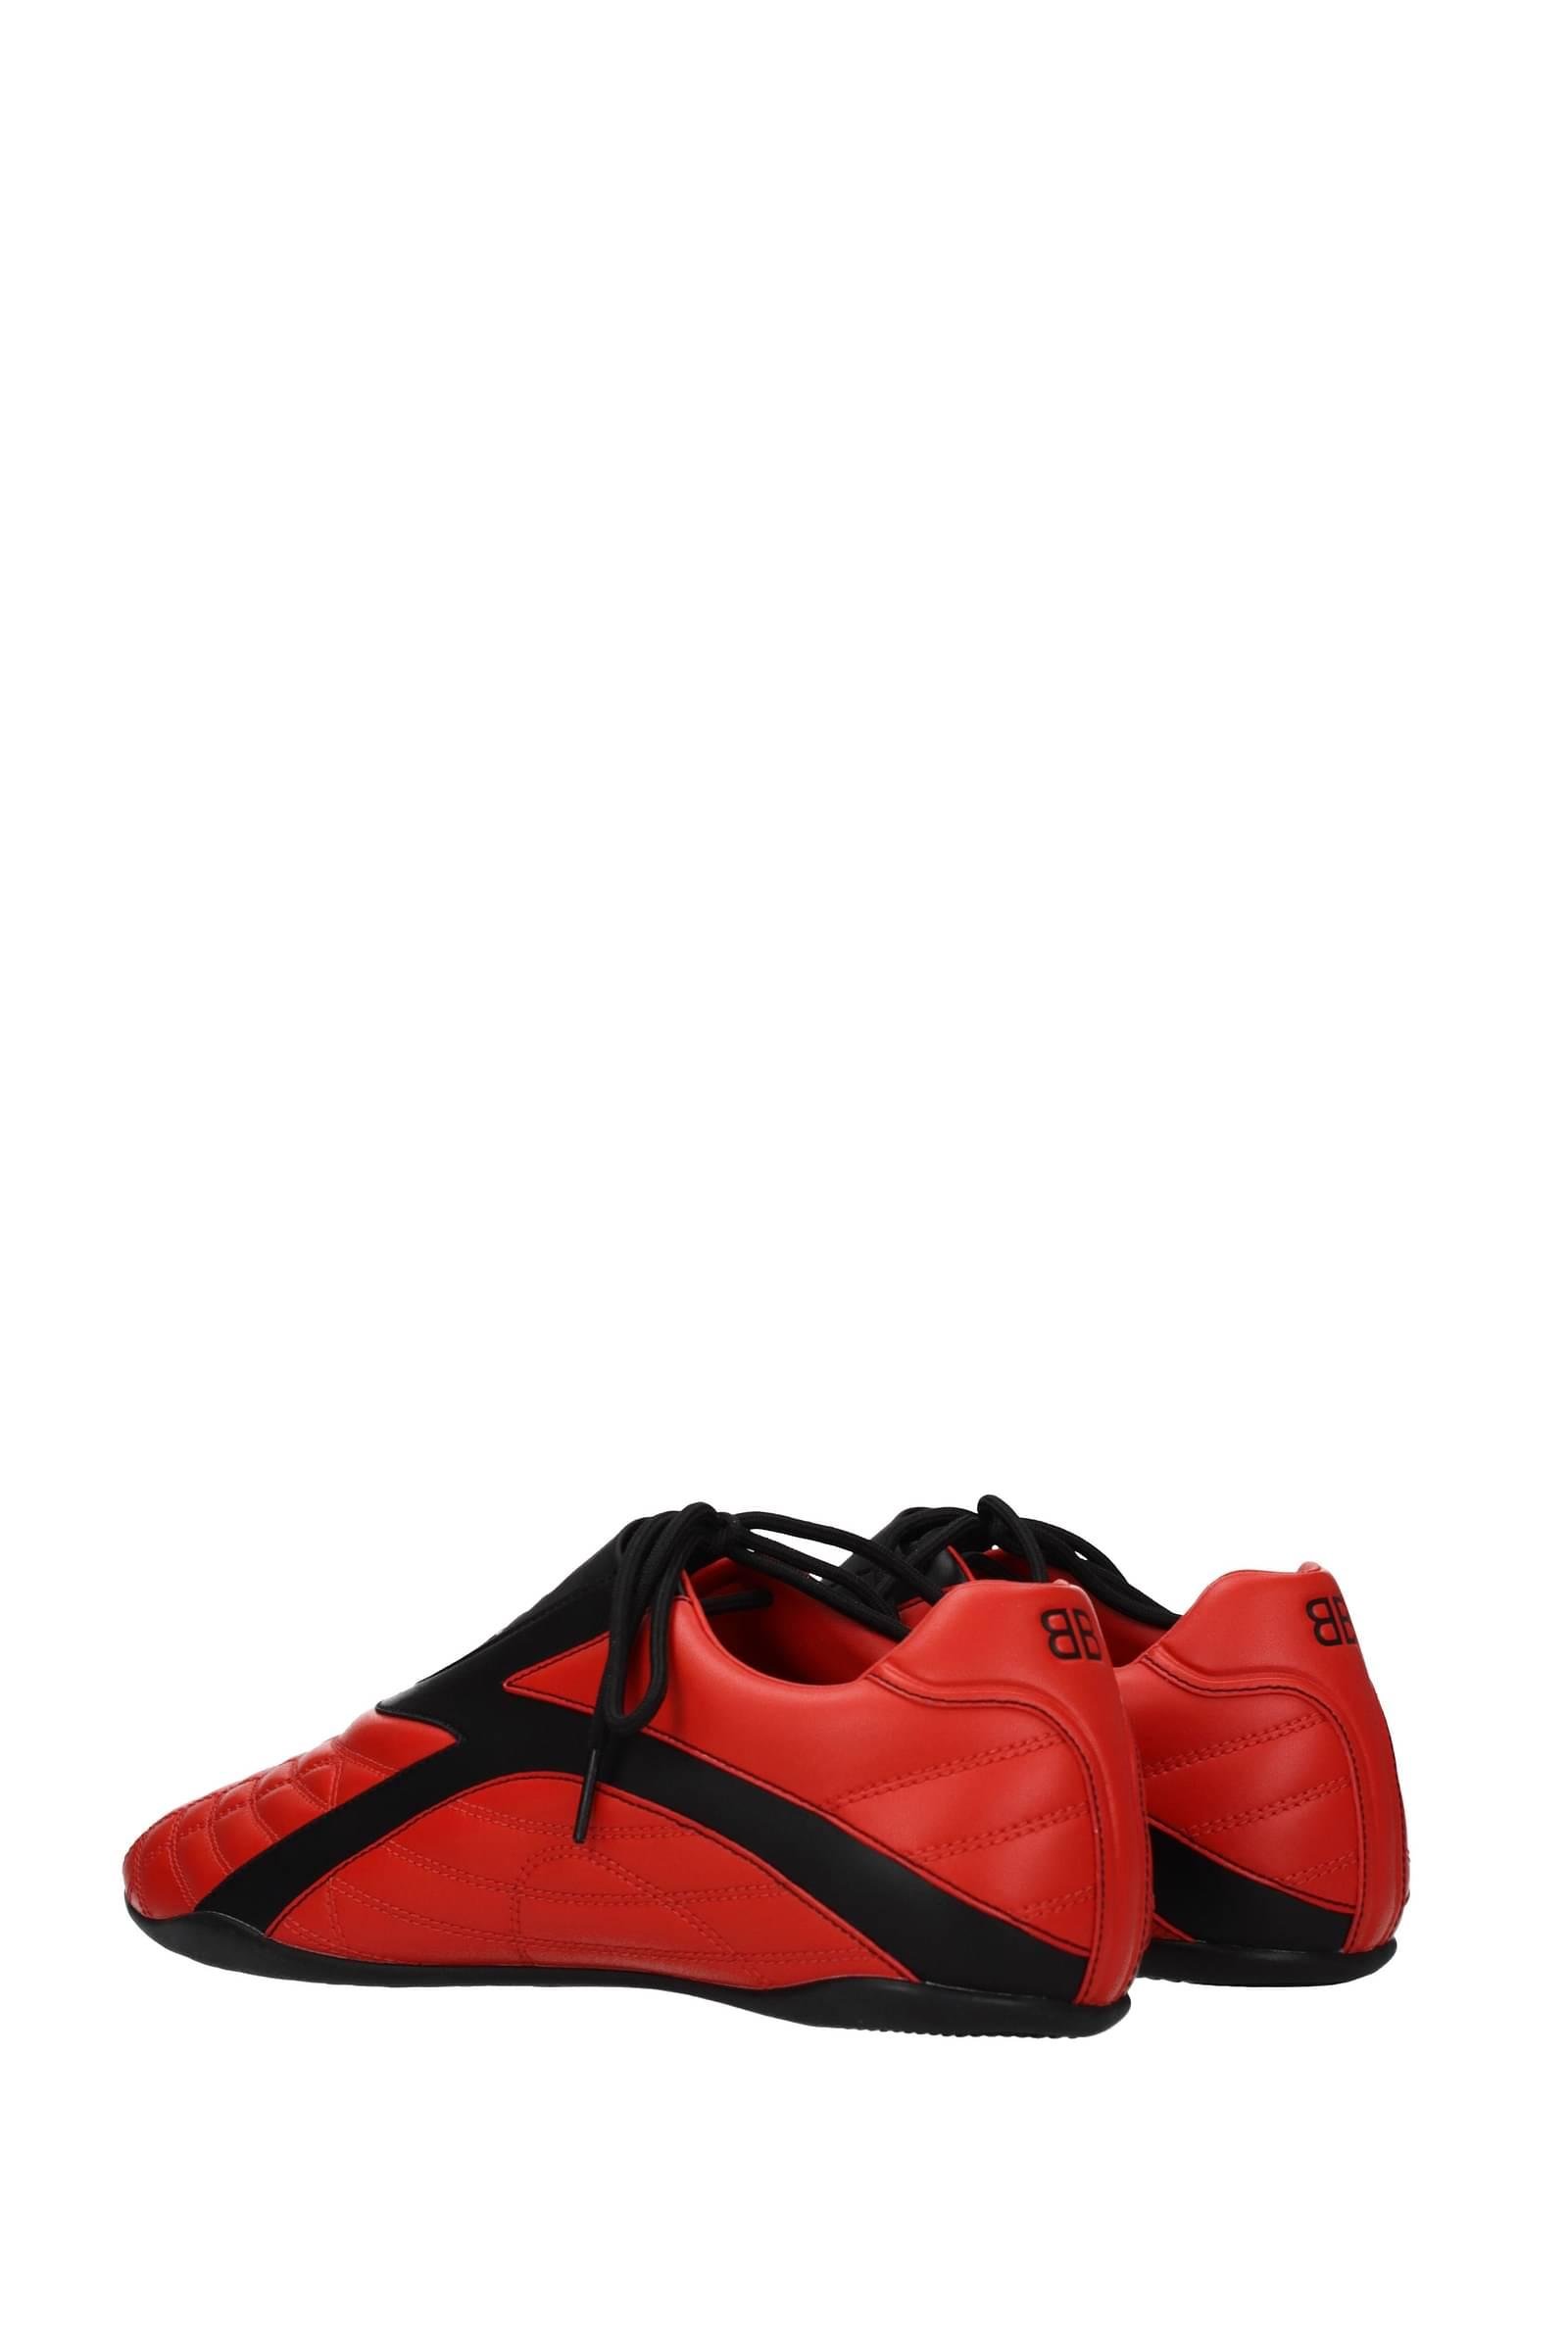 Balenciaga Sneakers Zen Leather Red Black for Men